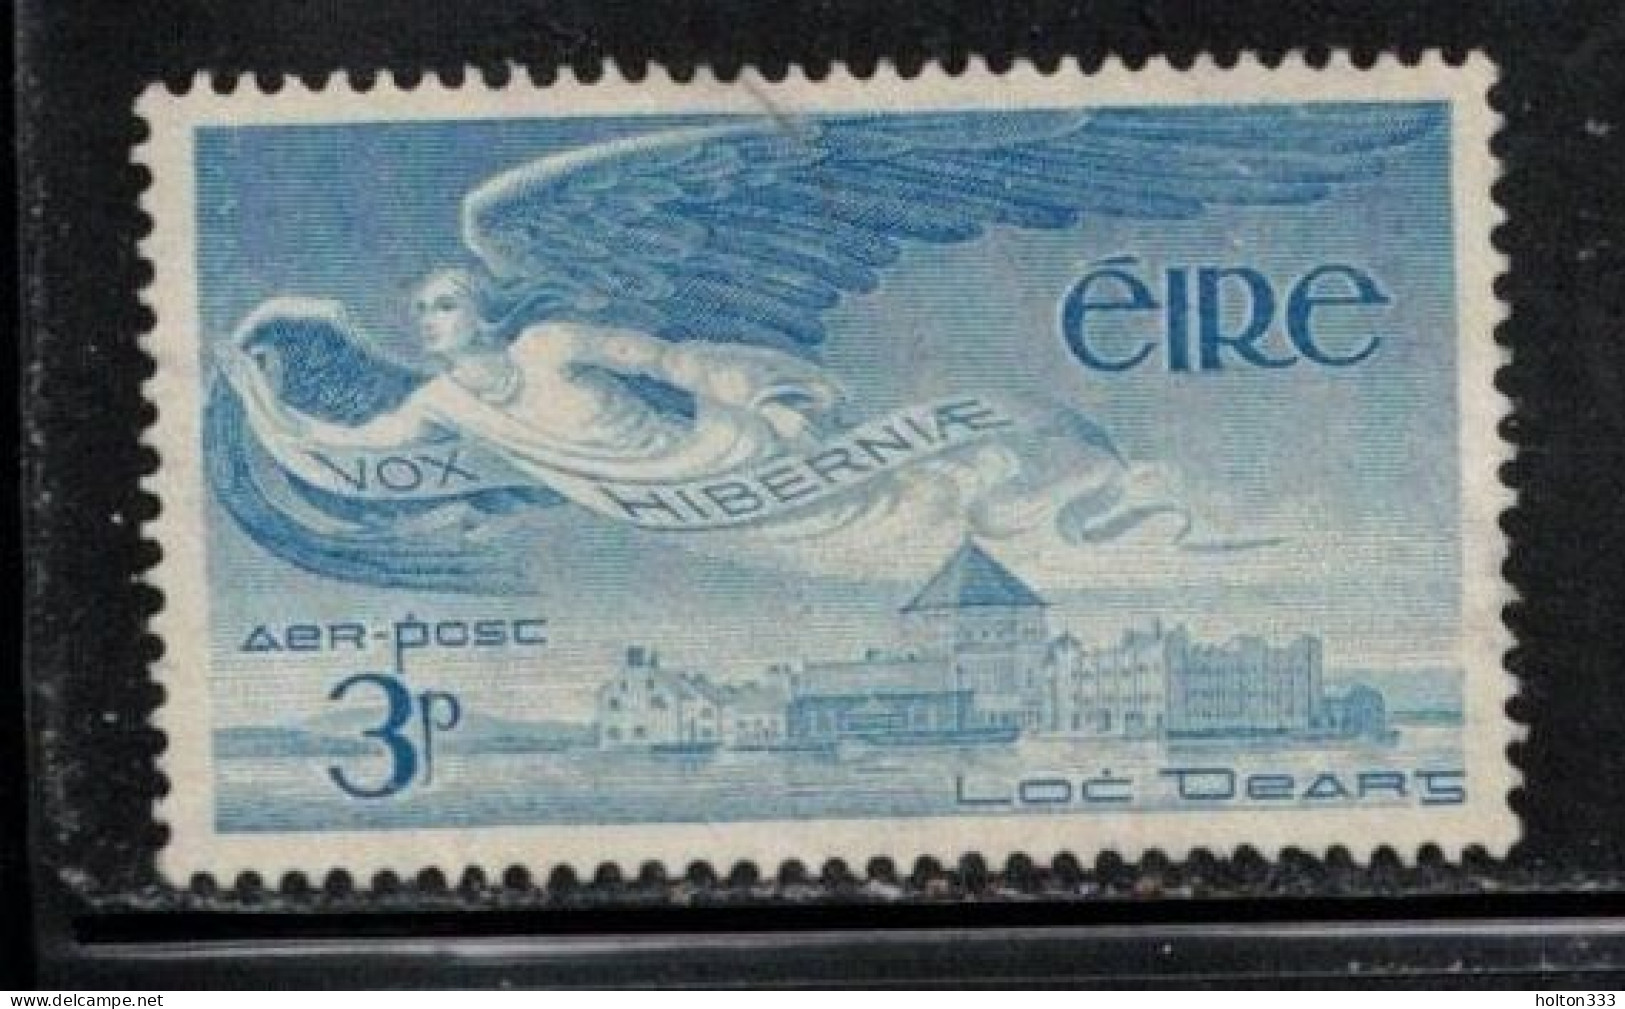 IRELAND Scott # C2 Used - Airmails - Used Stamps